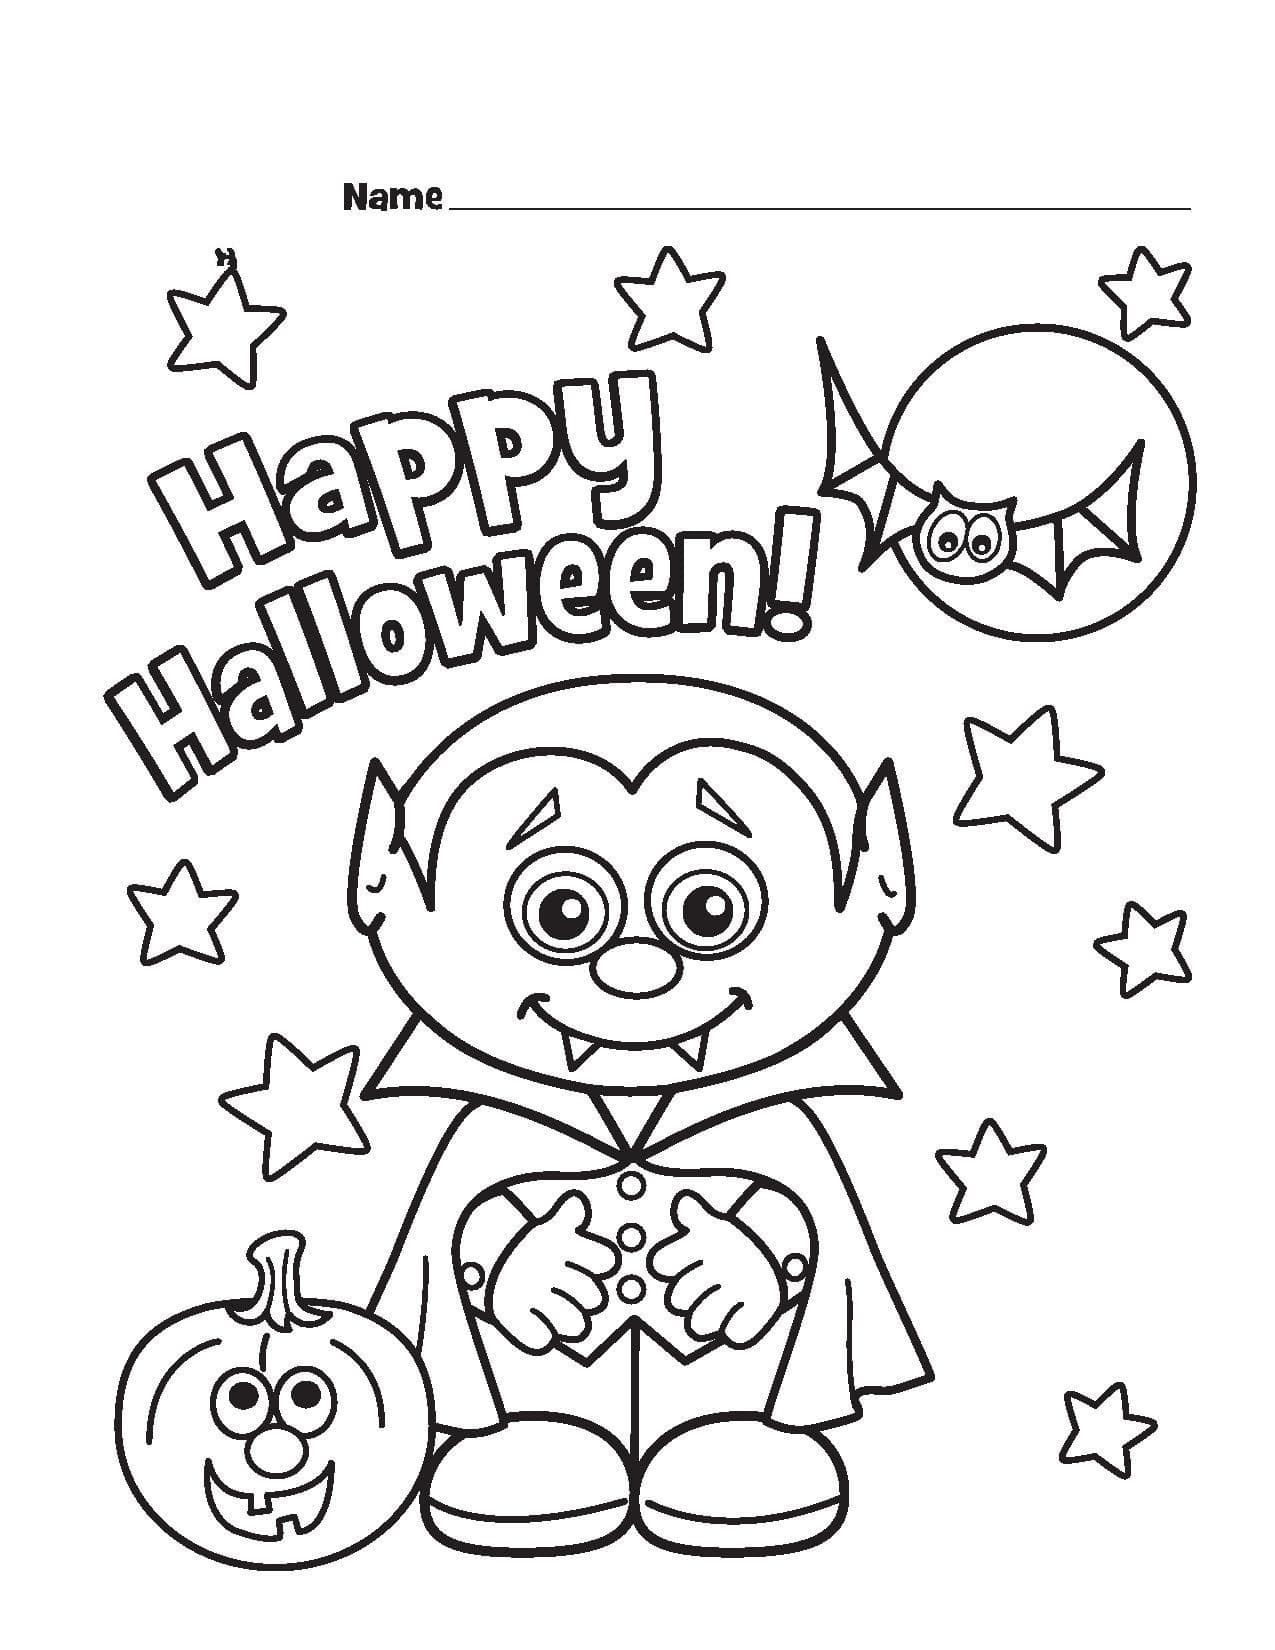 ausmalbilderkinder.de - Ausmalbilder Halloween Kostüme 20